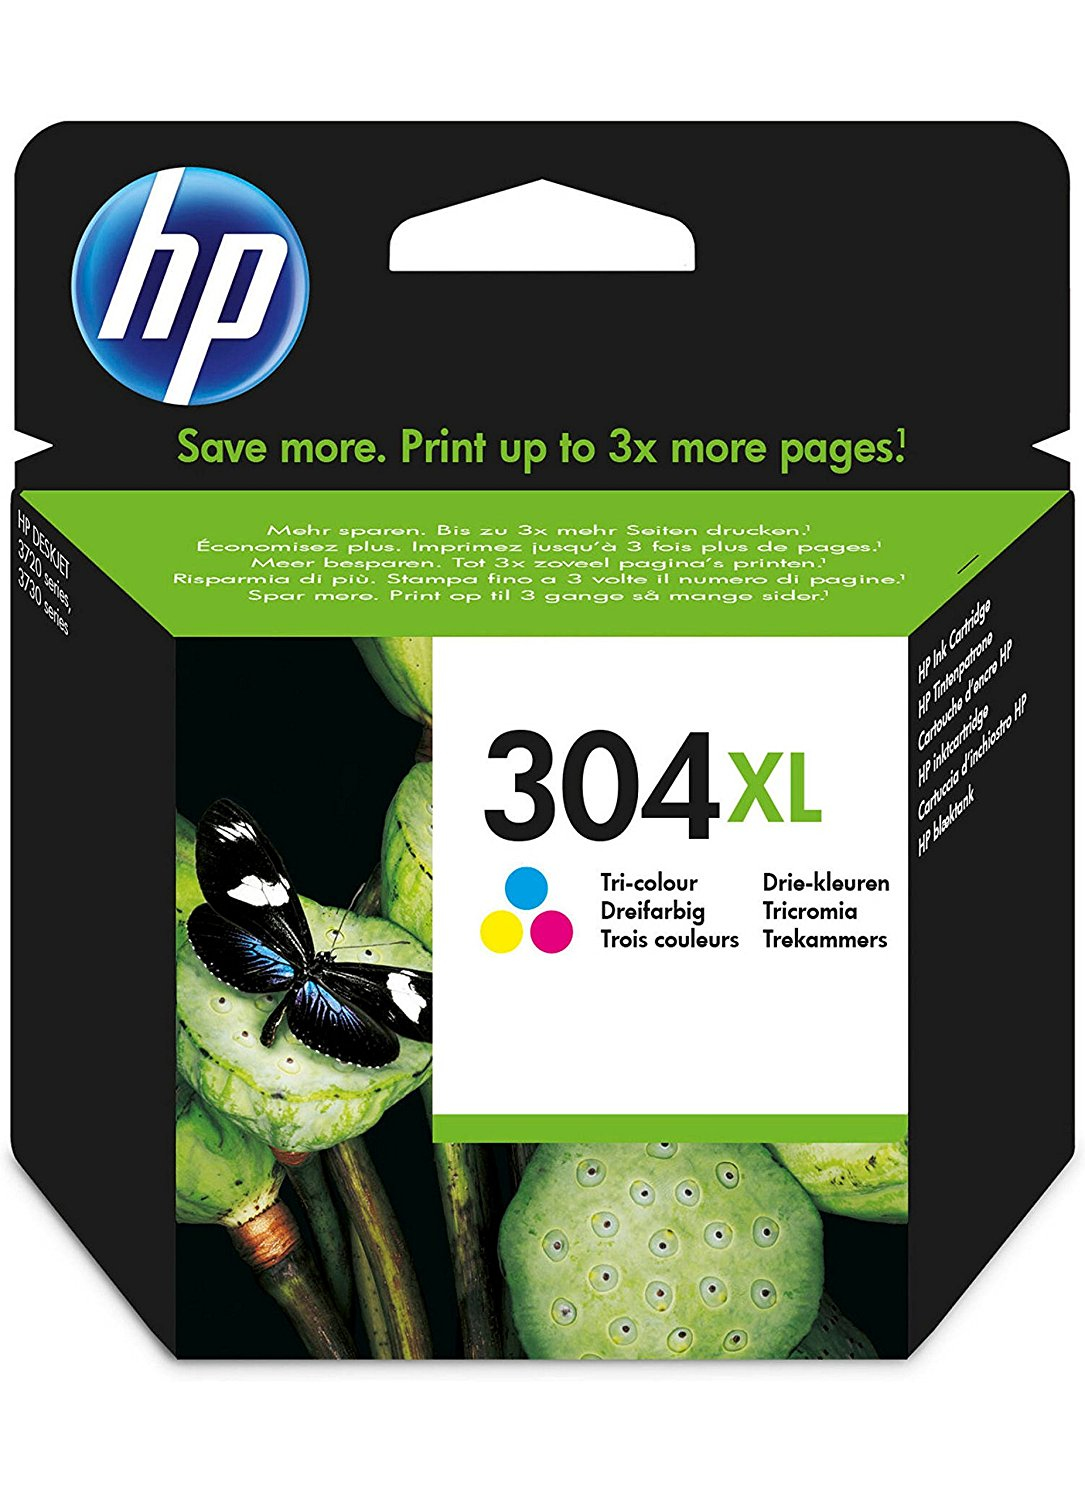 Hp - Inkjet Supply Mvs (1n)      Ink Cartridge No 304xl Tri-colo     Blister                             N9k07ae#301